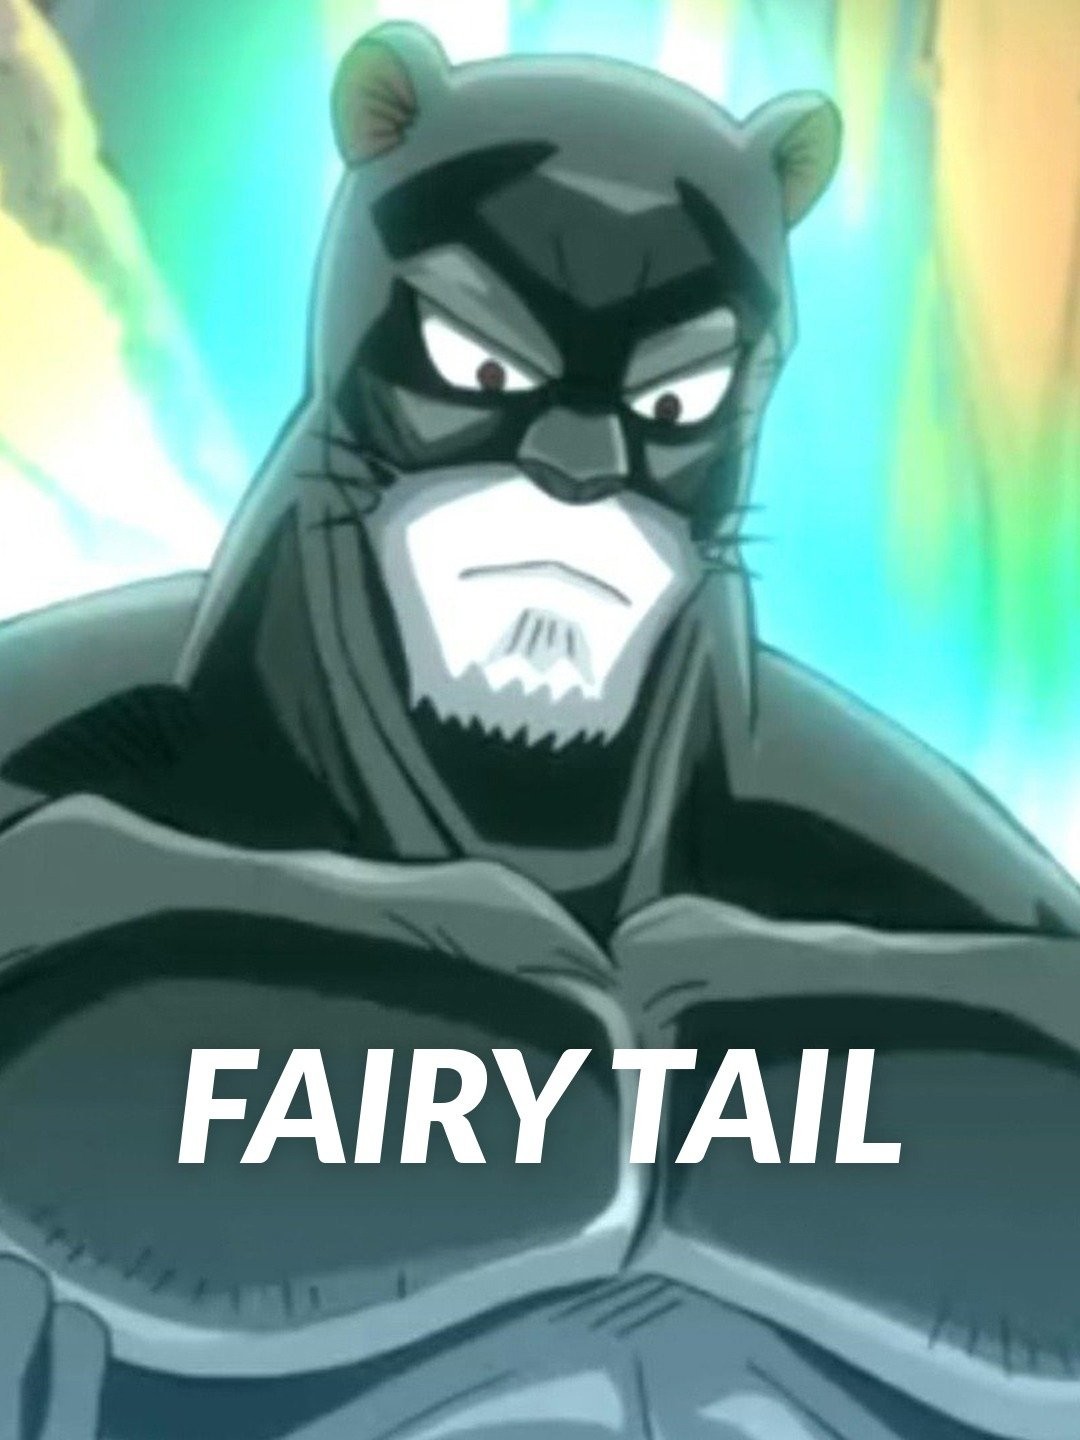 Update 19 de Anime Fighters inspirado em Fairy Tail